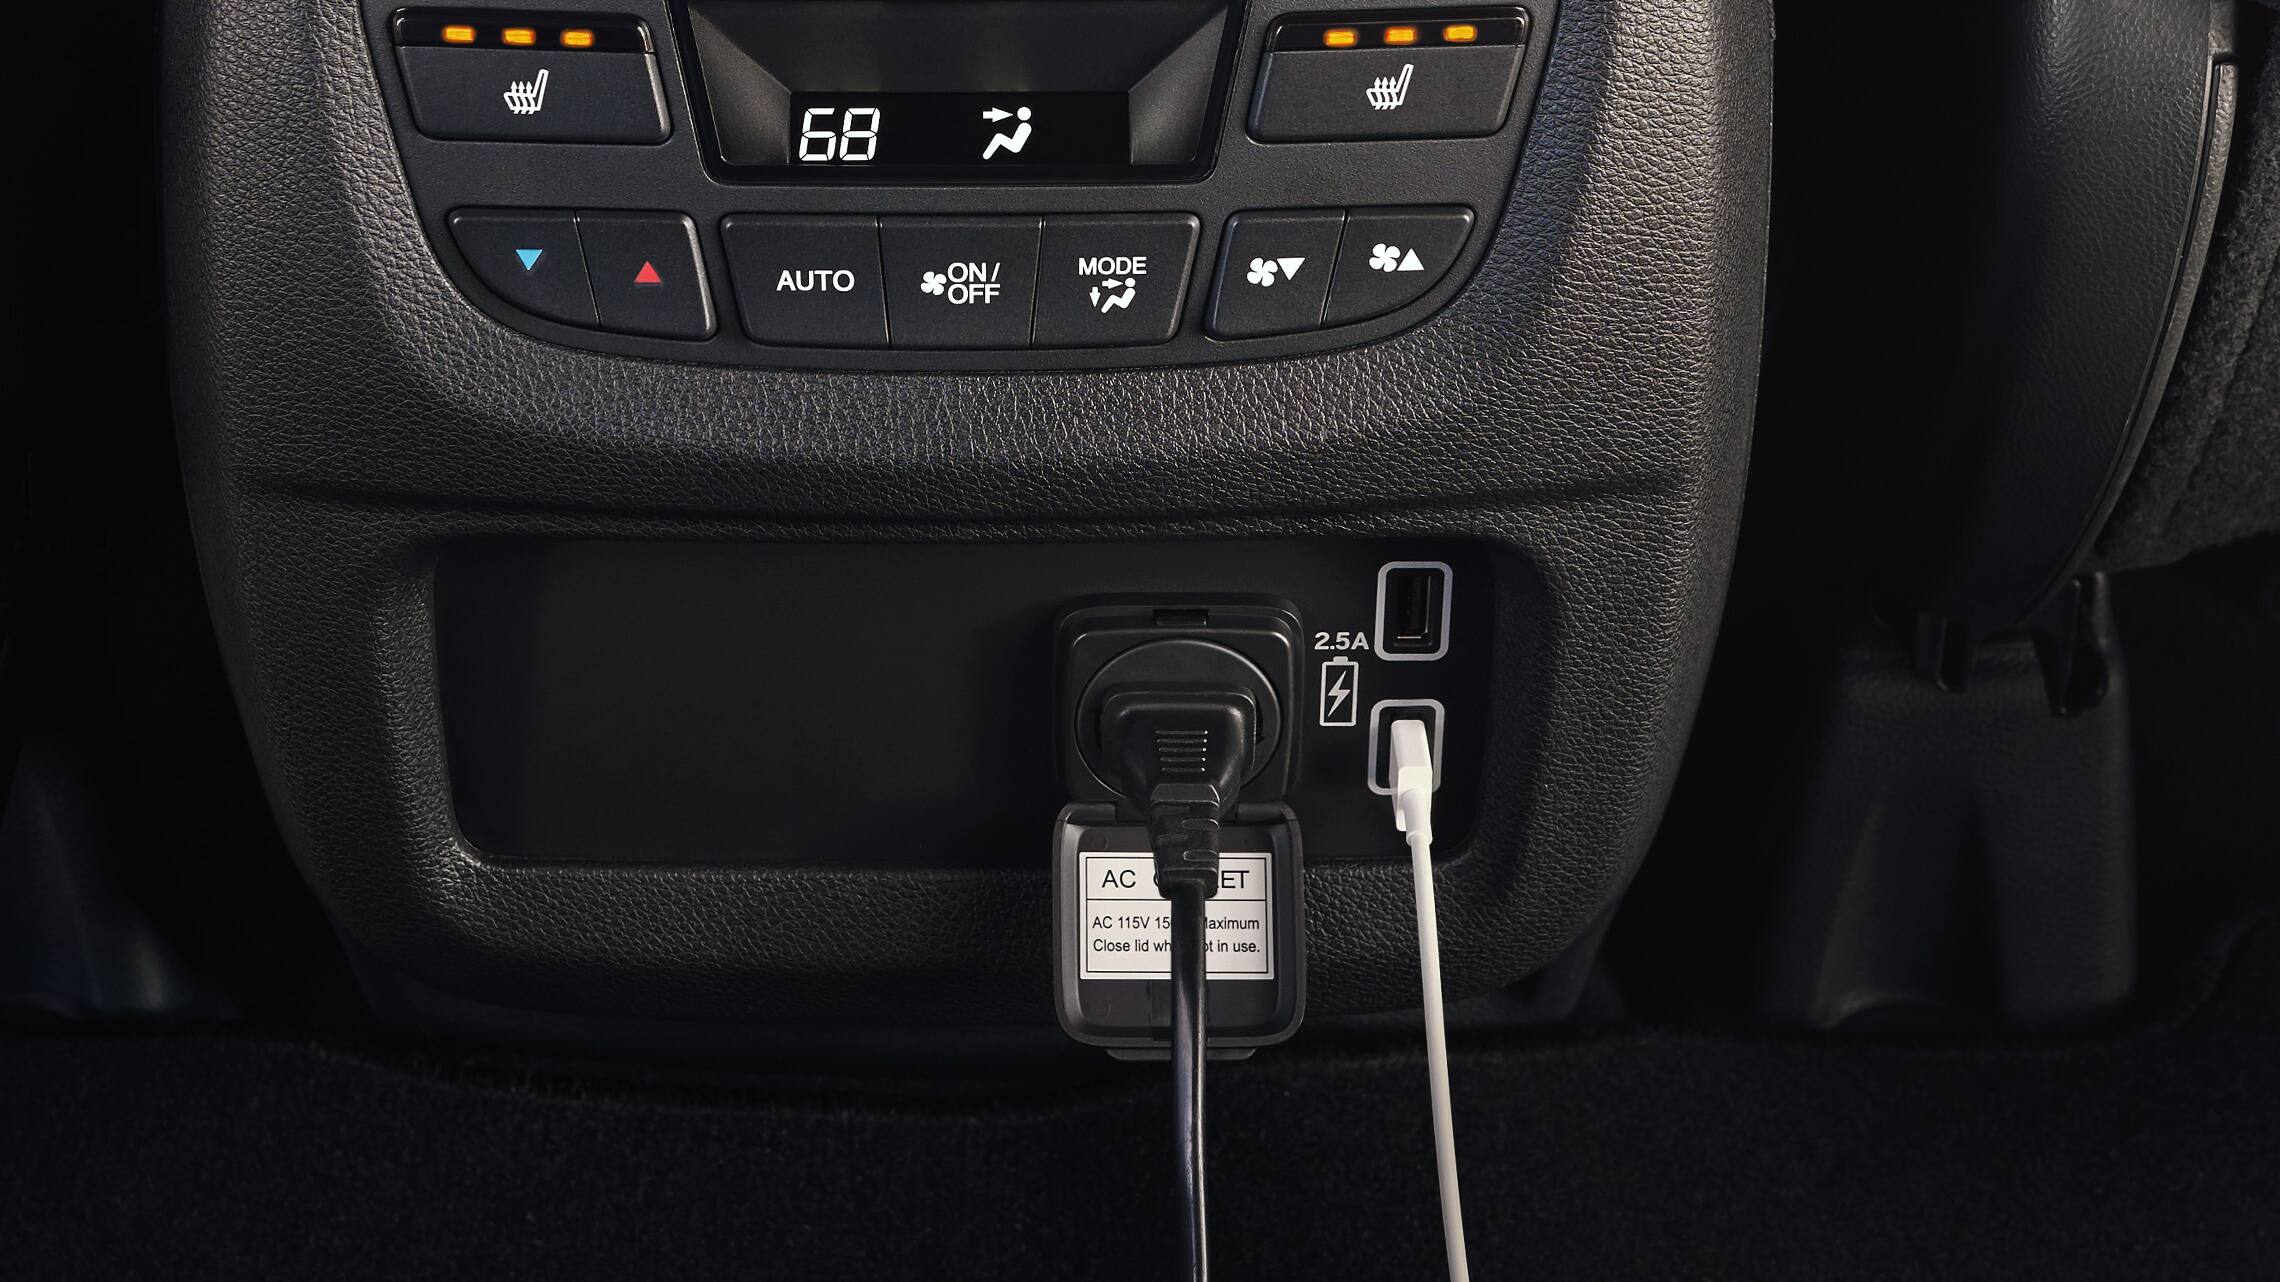 Interior view of 180-watt max power/120-volt AC power detail on the 2019 Honda Passport.